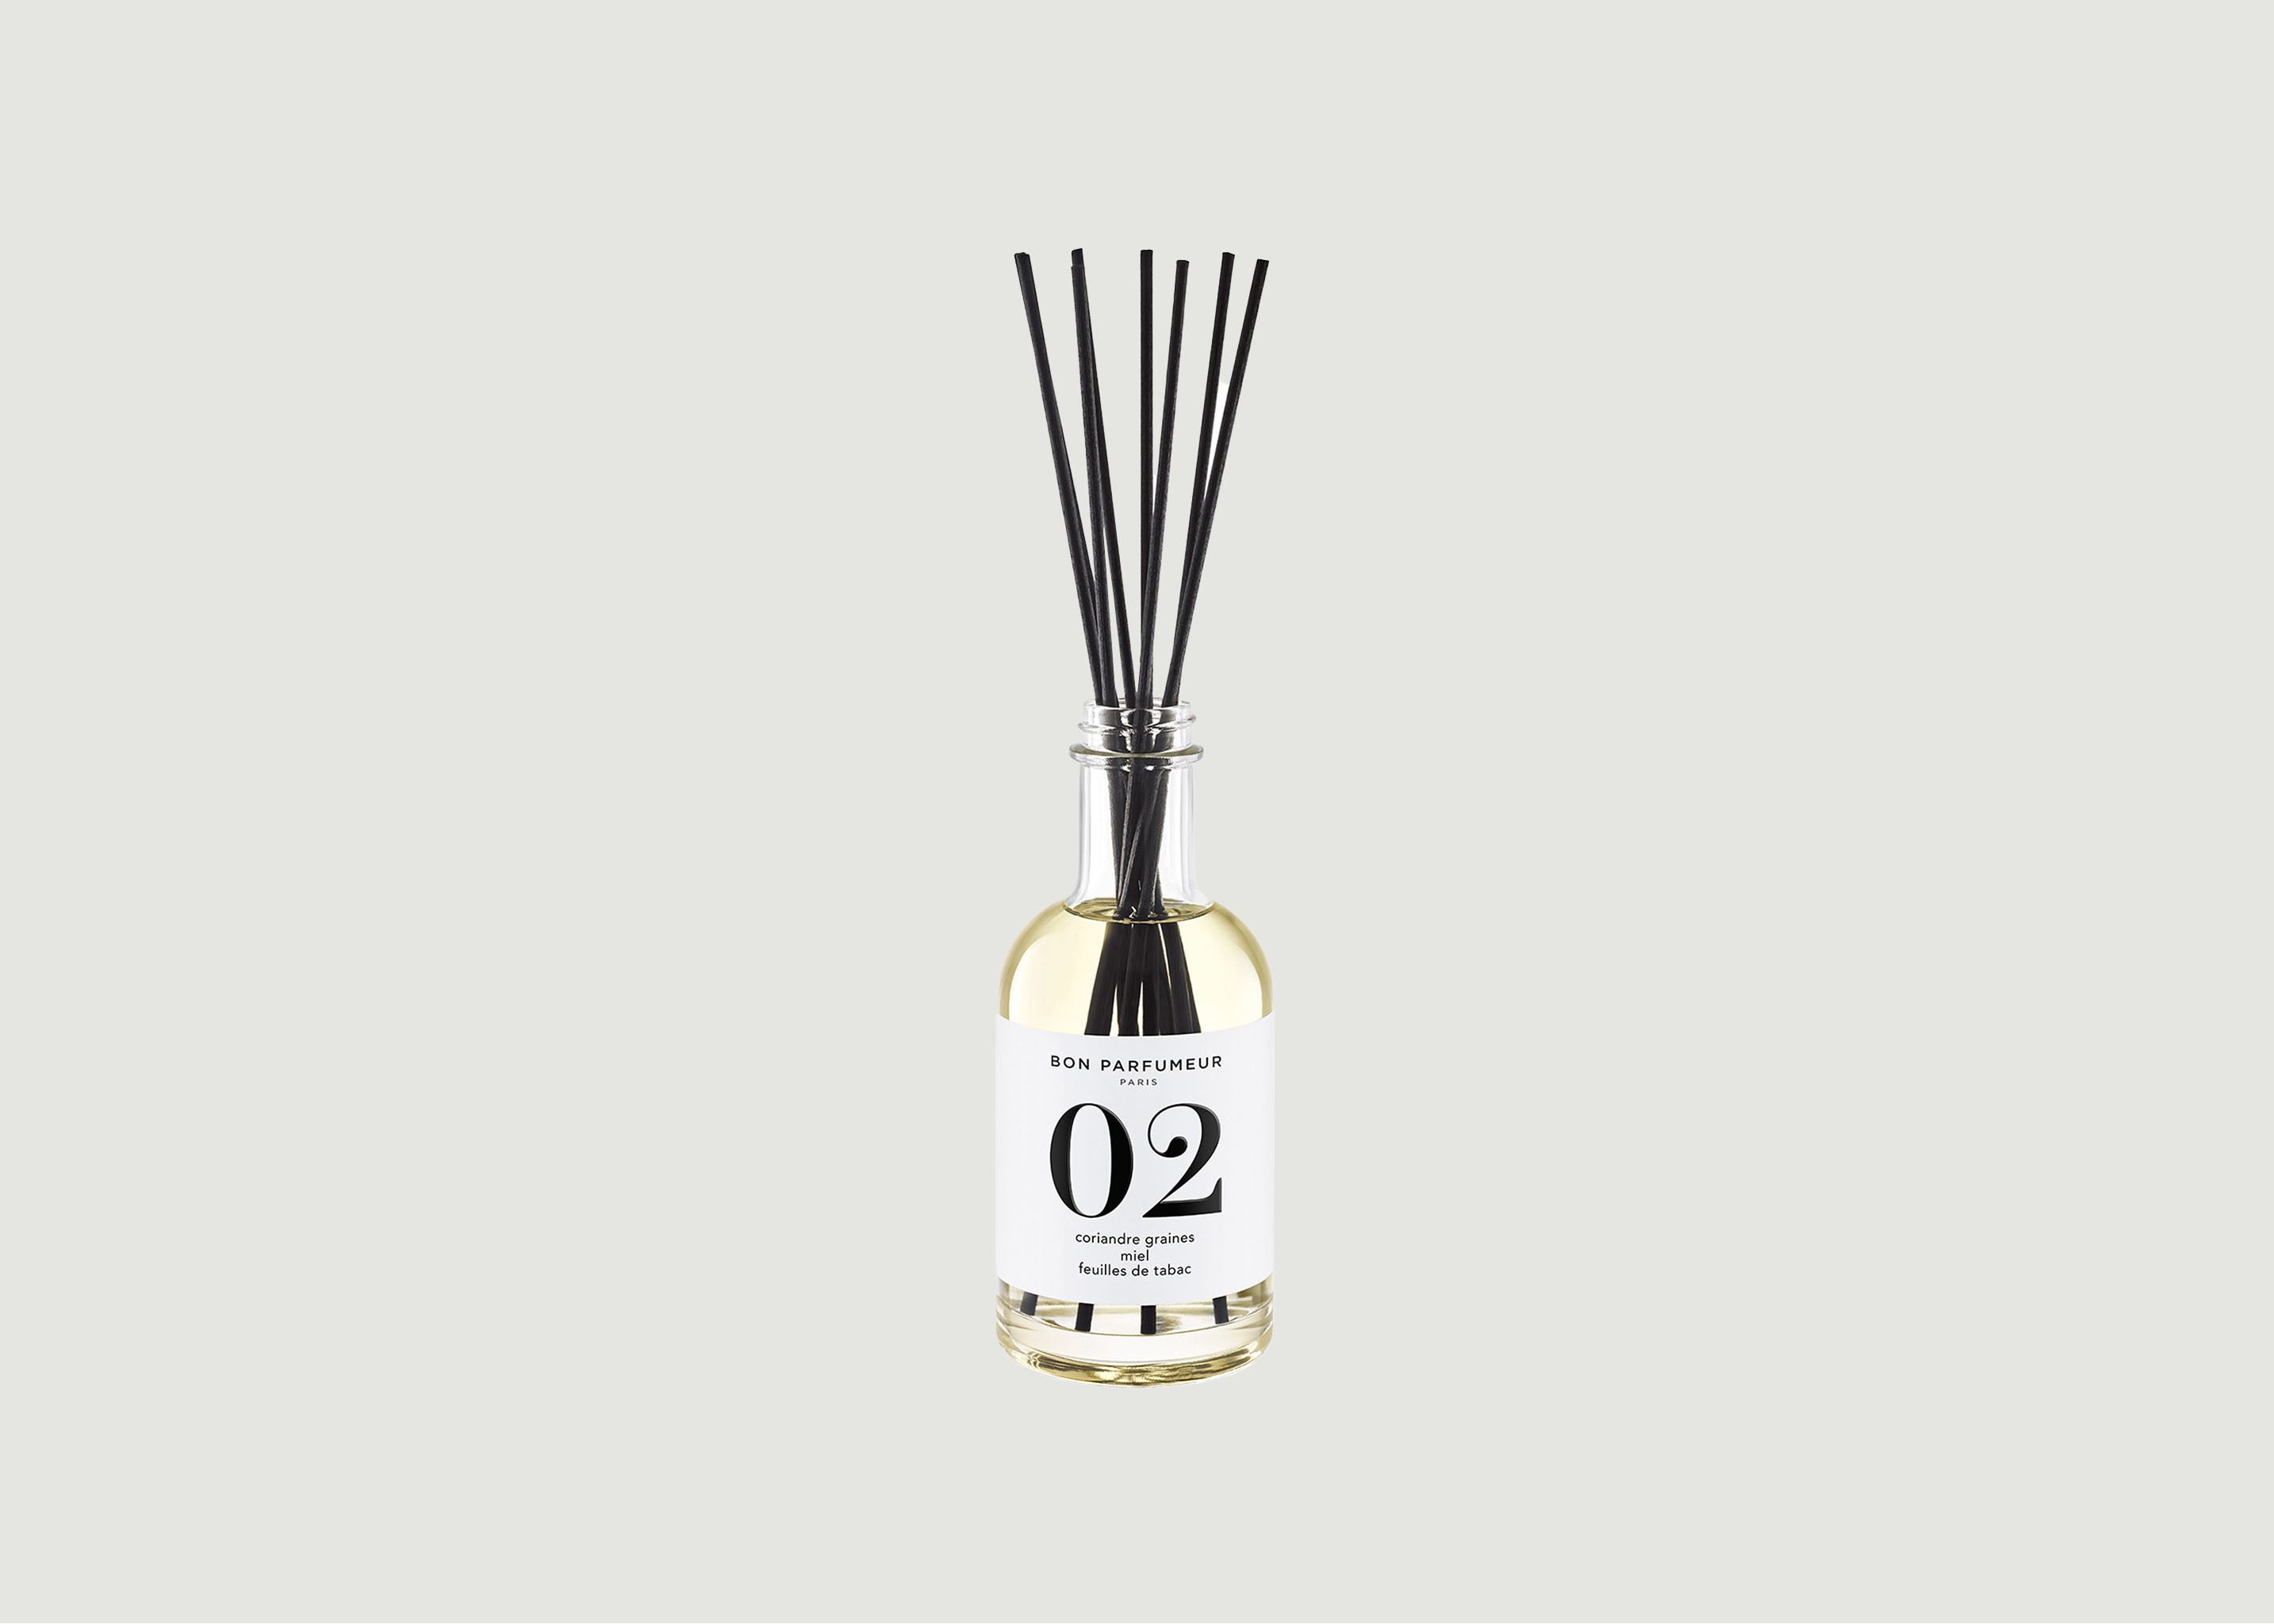 Huisgeurverspreider  02: Coriander-Samen, Honig und Tabakblätter - Bon Parfumeur